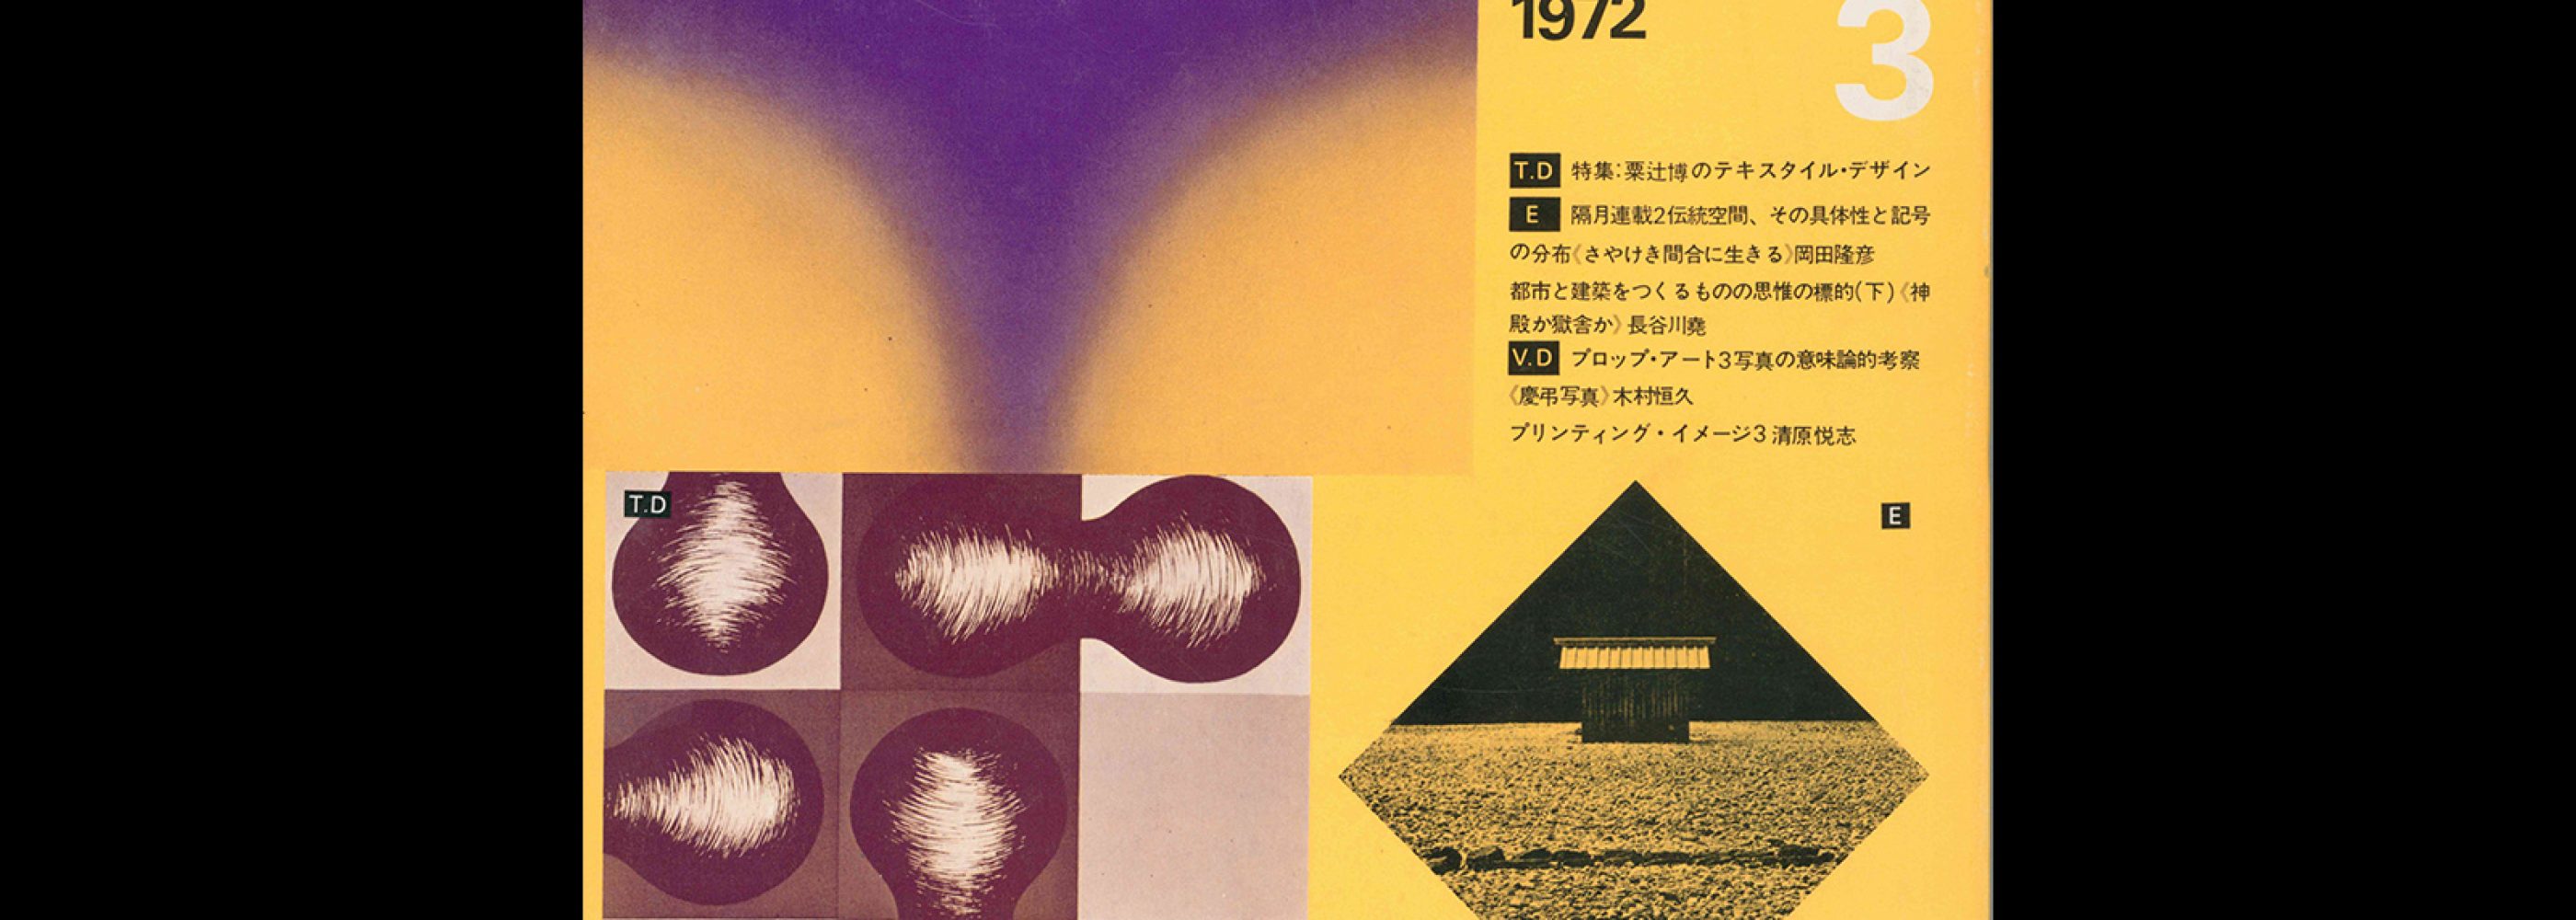 Design No.155 March 1972. Cover design by Koji Kusafuka